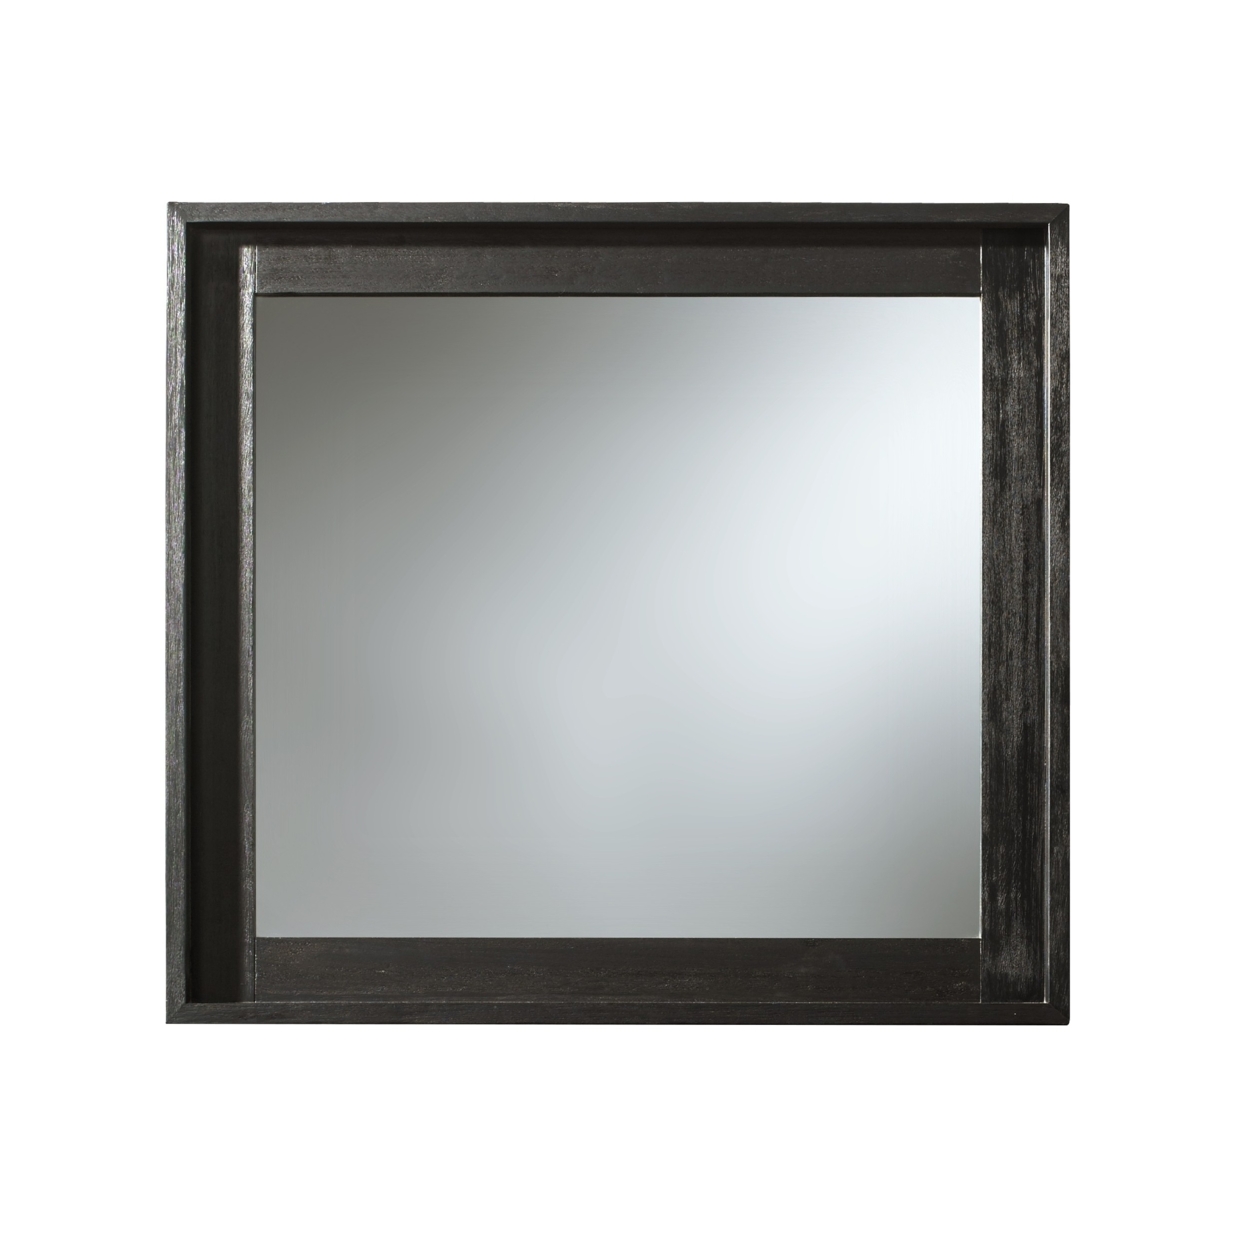 Carl 42 Inch Wood Wall Dresser Mirror, Rectangular Molded Frame, Oak Black- Saltoro Sherpi